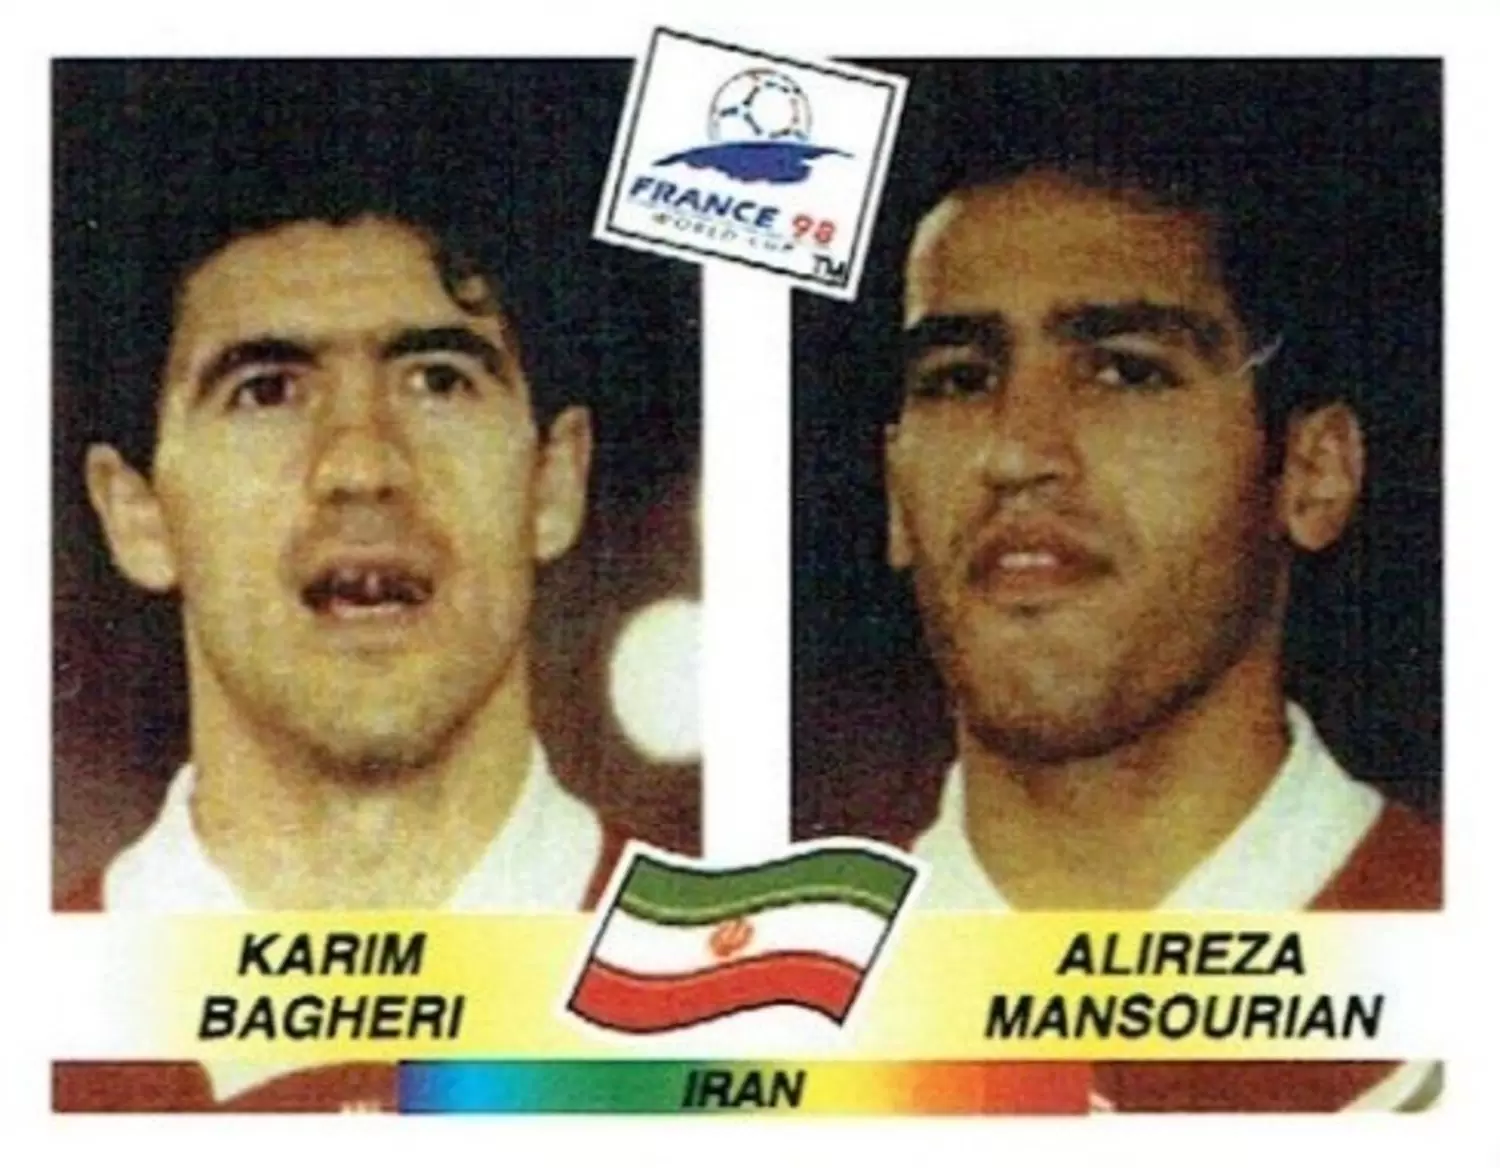 France 98 - Karim Bagheri / Alireza Mansourian - IRN